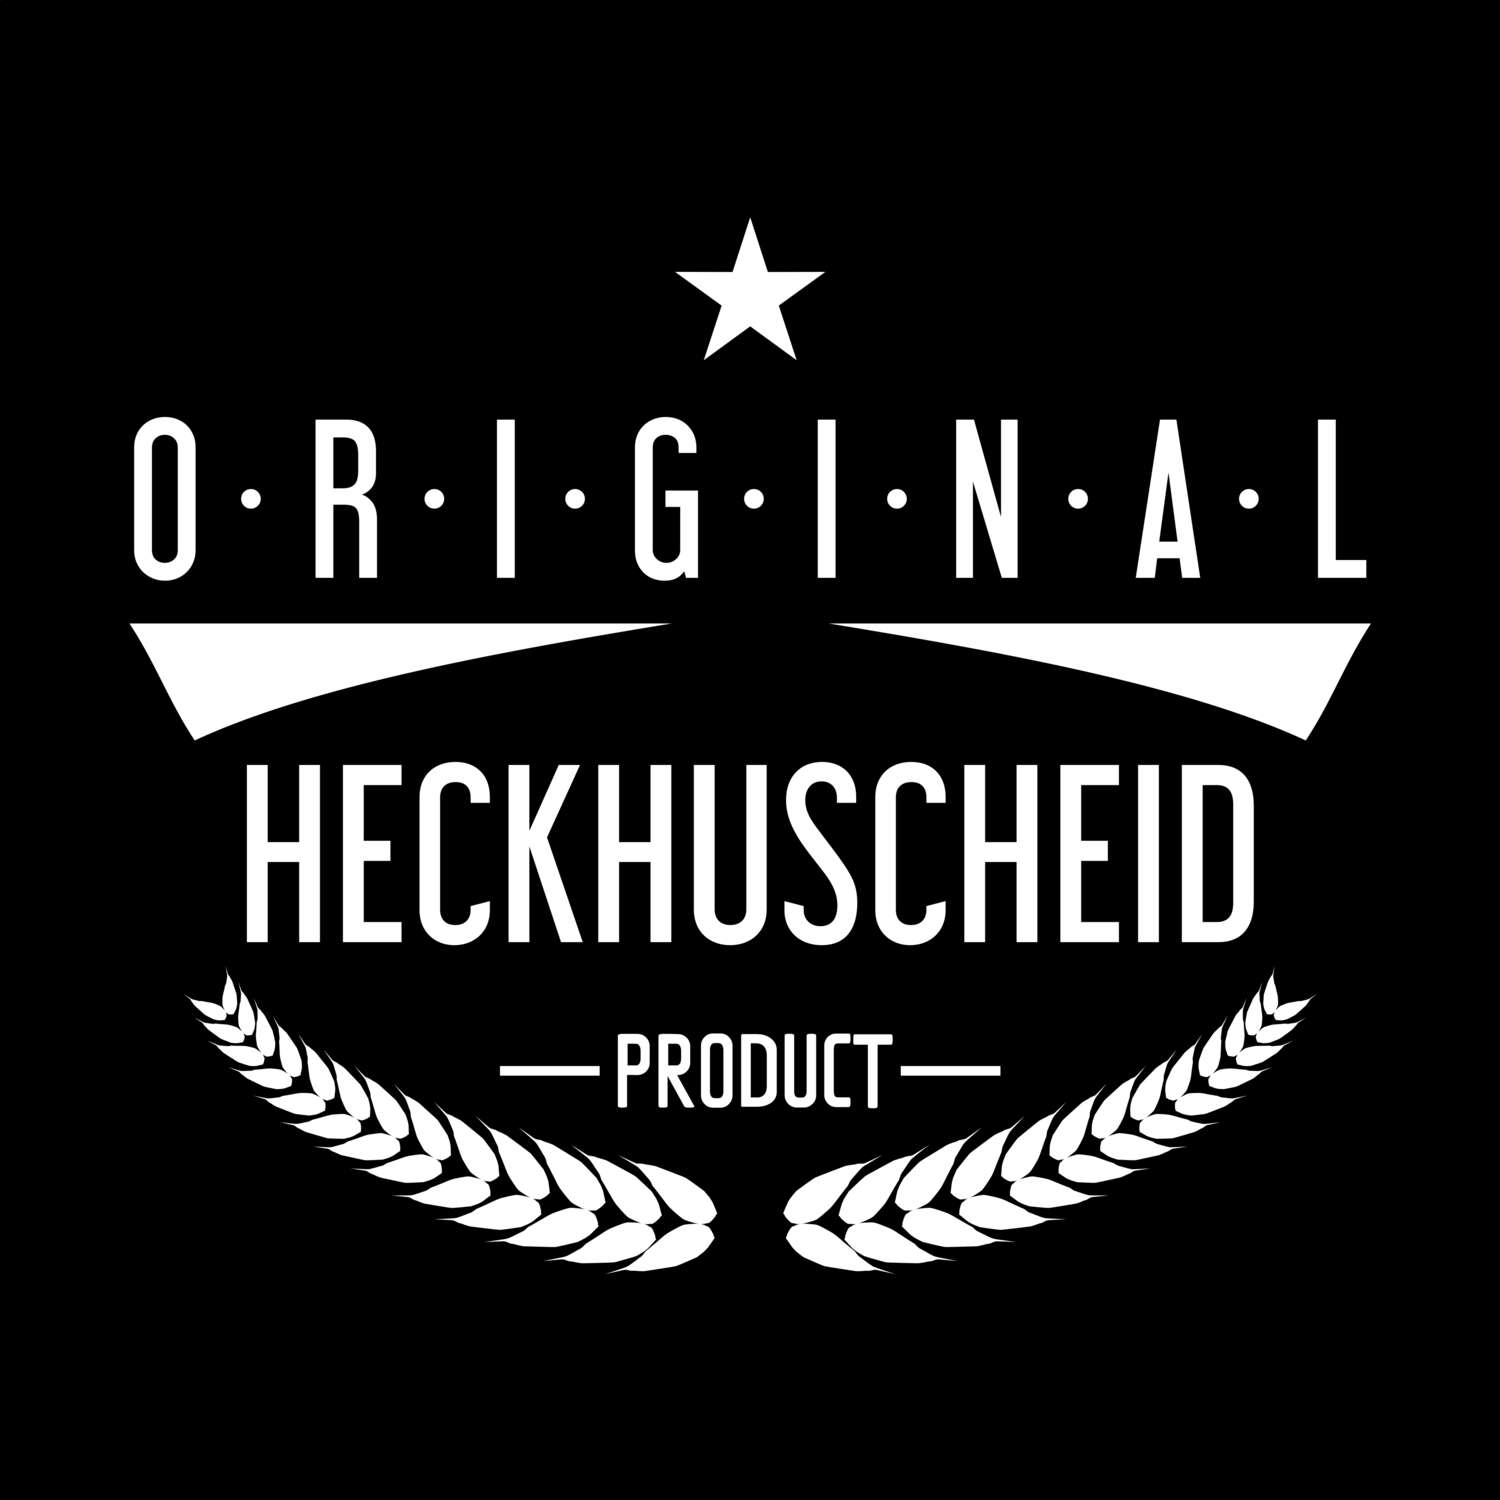 Heckhuscheid T-Shirt »Original Product«